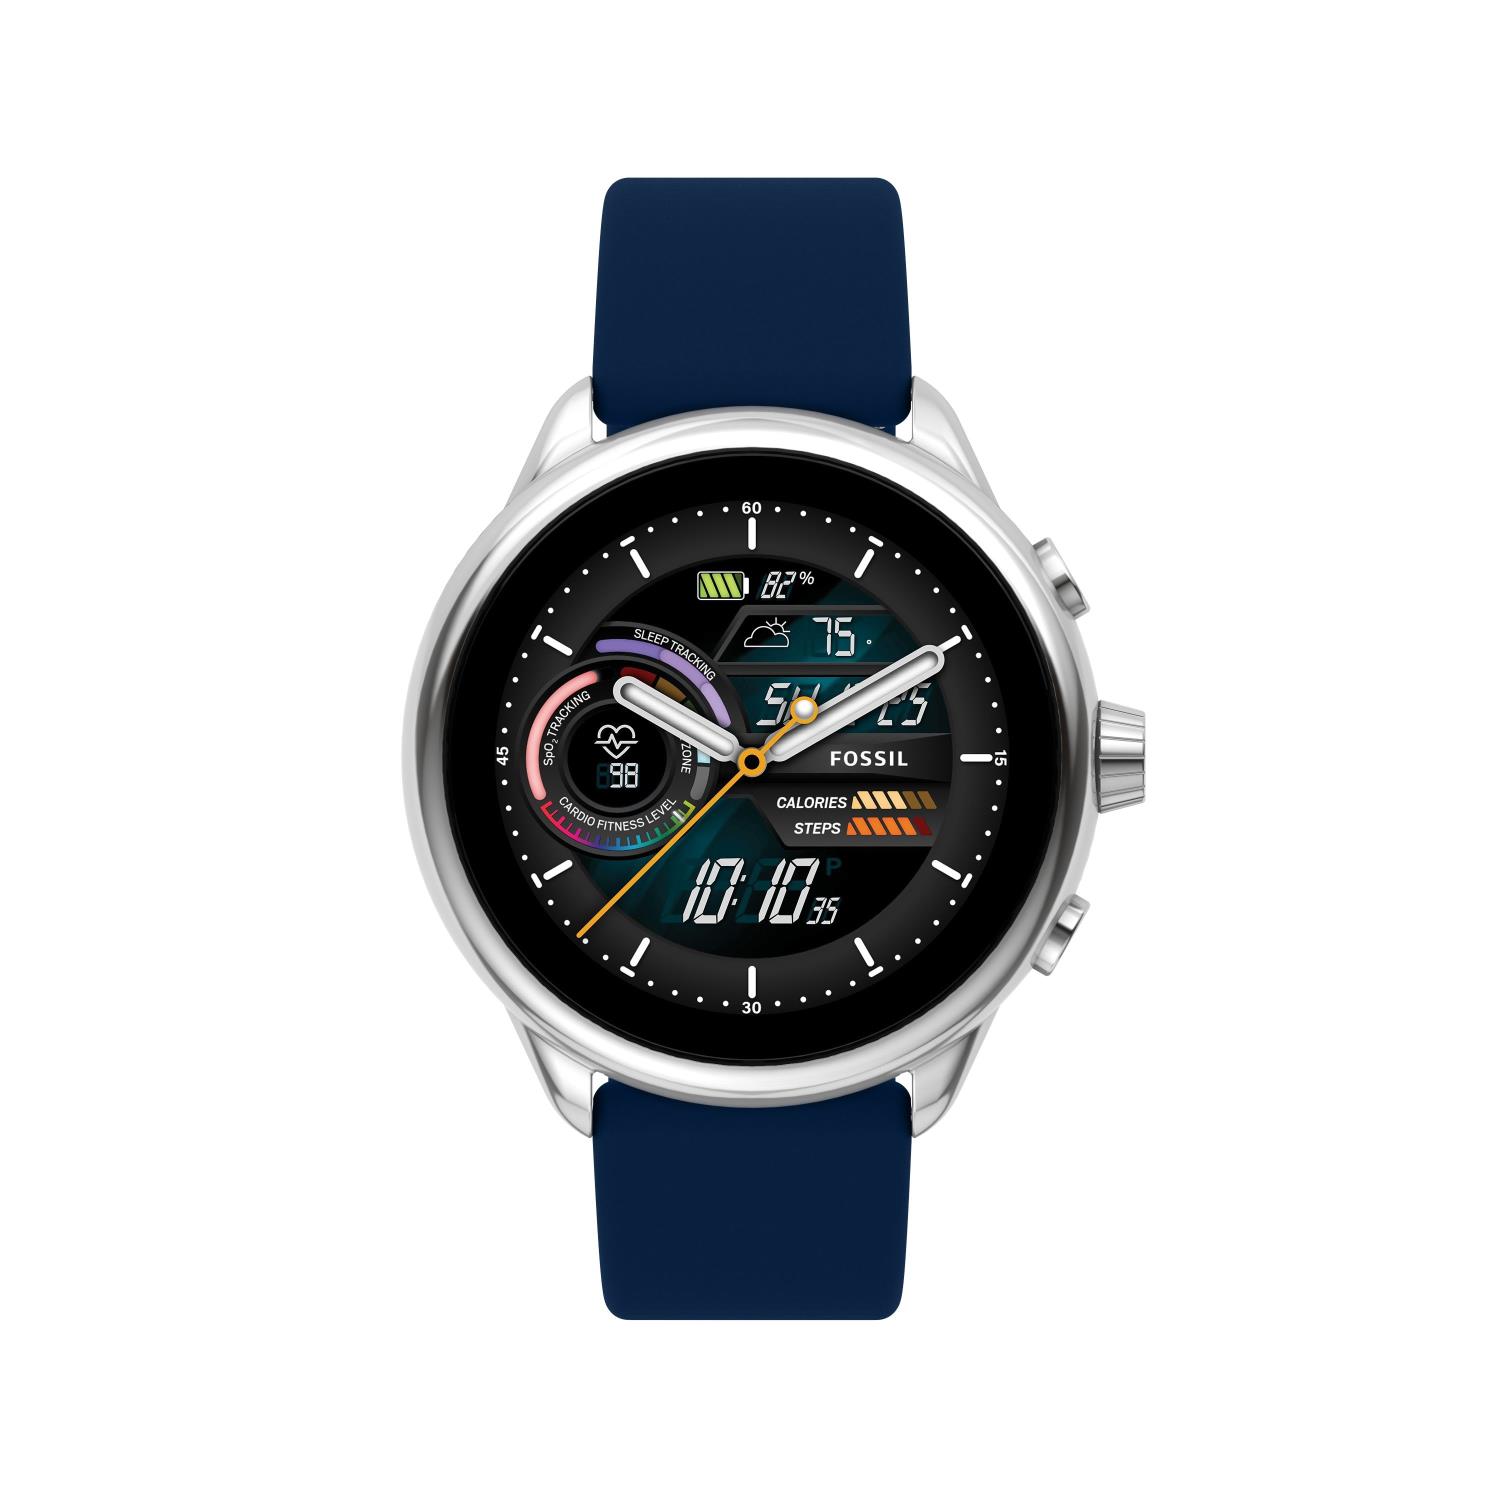 Smartwatch Fossil Gen 6 Wellness Edition con cinturino in silicone blu navy Ref. FTW4070 - FOSSIL